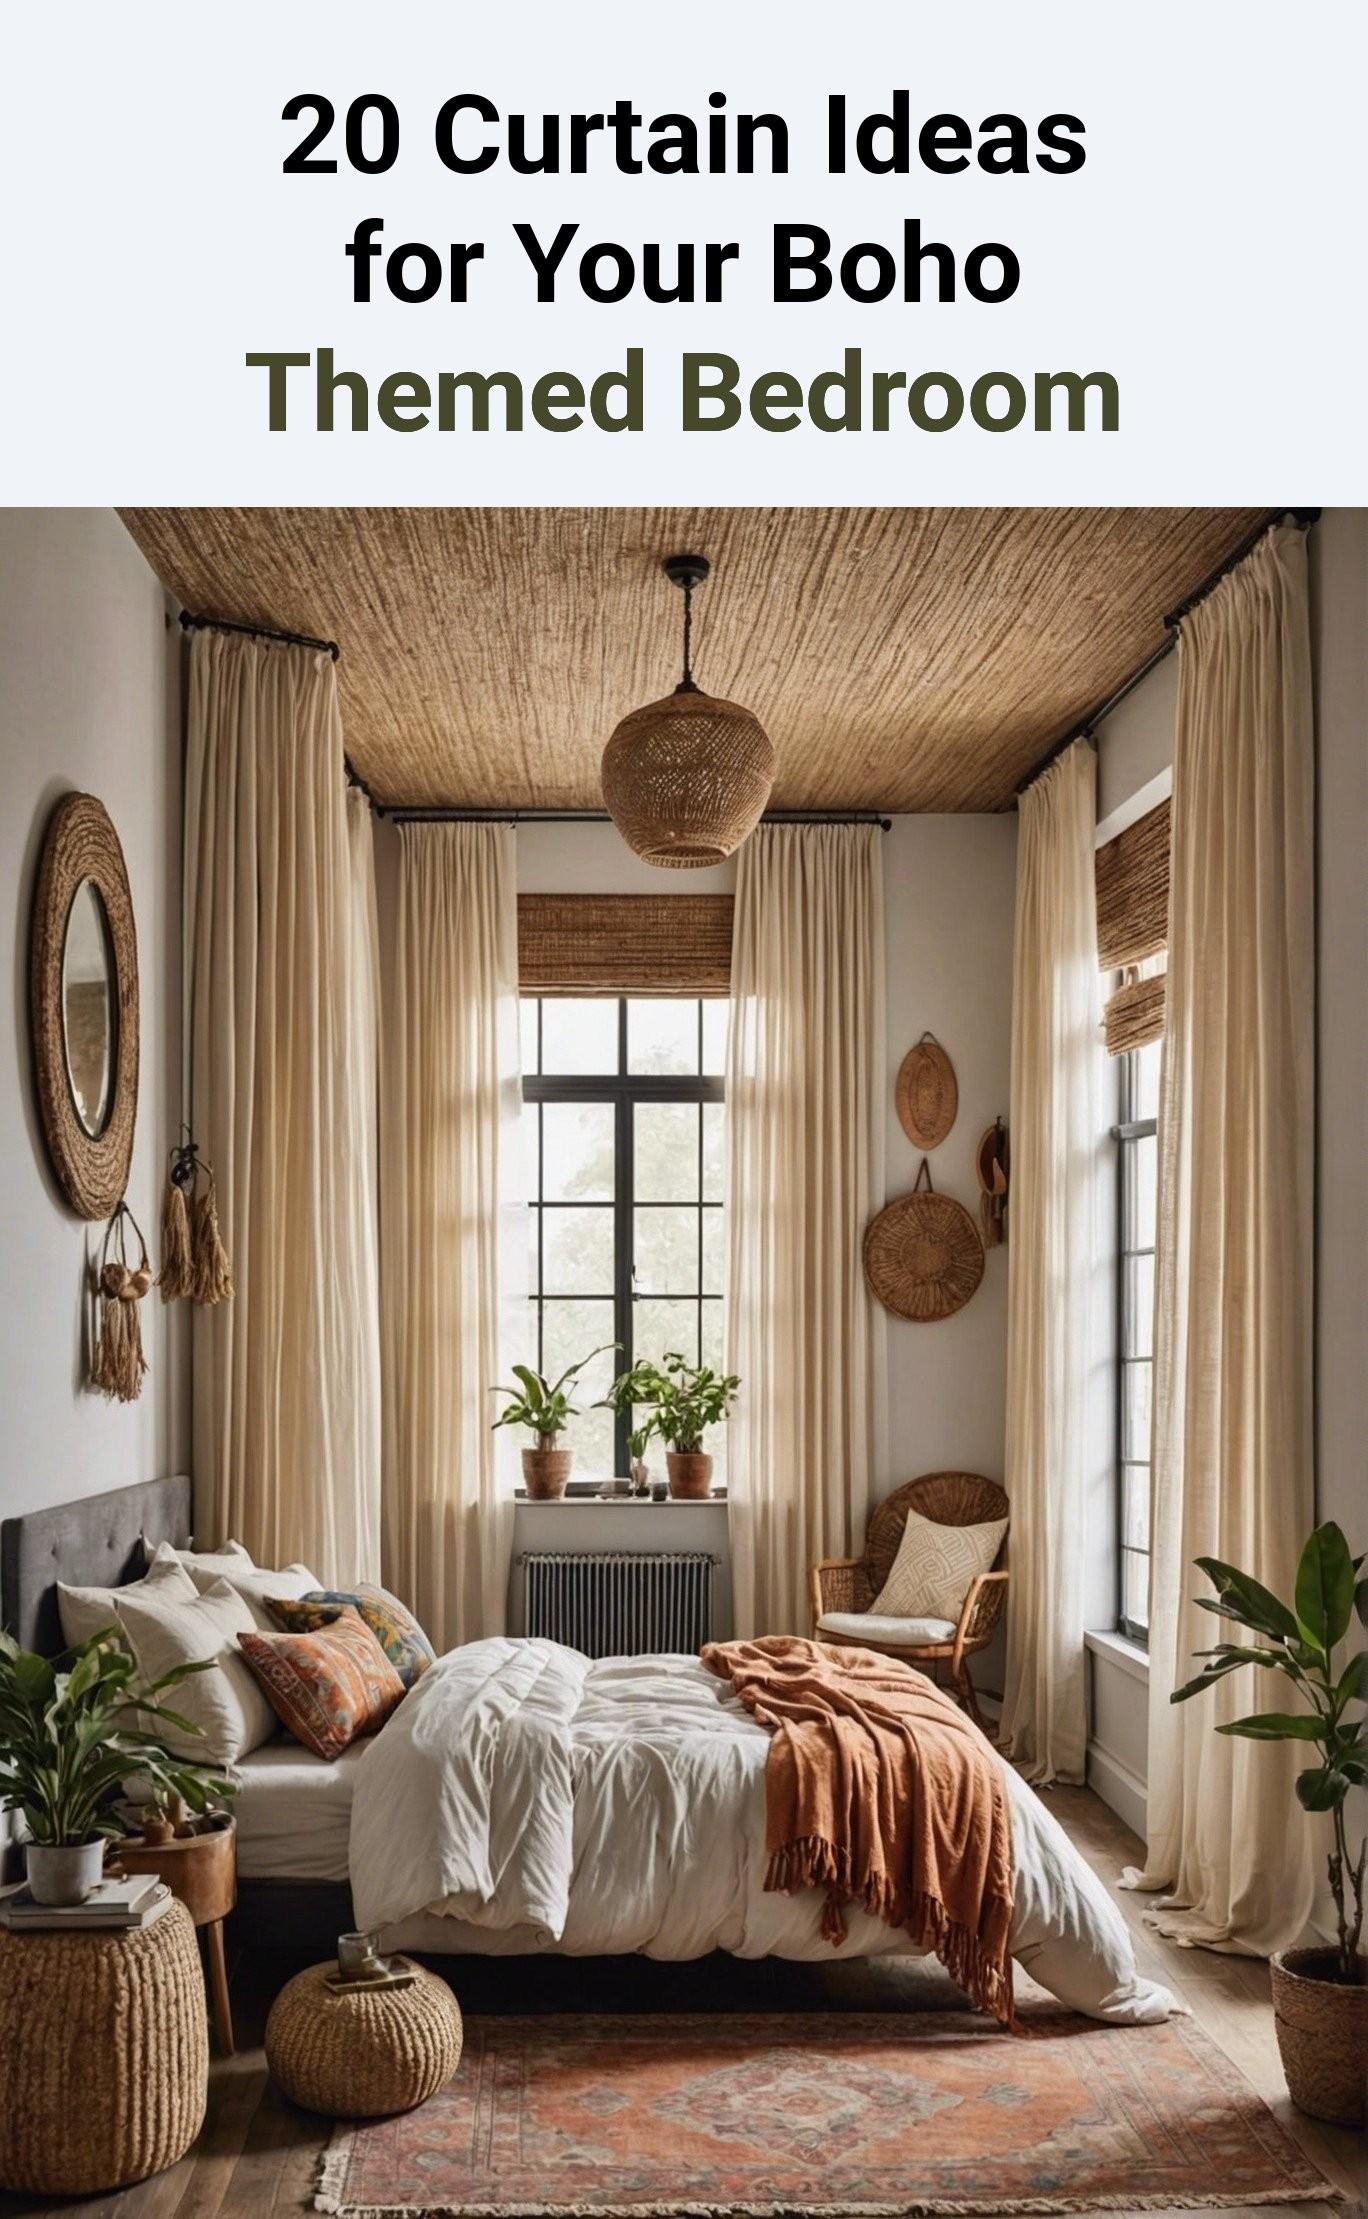 20 Curtain Ideas for Your Boho Themed Bedroom